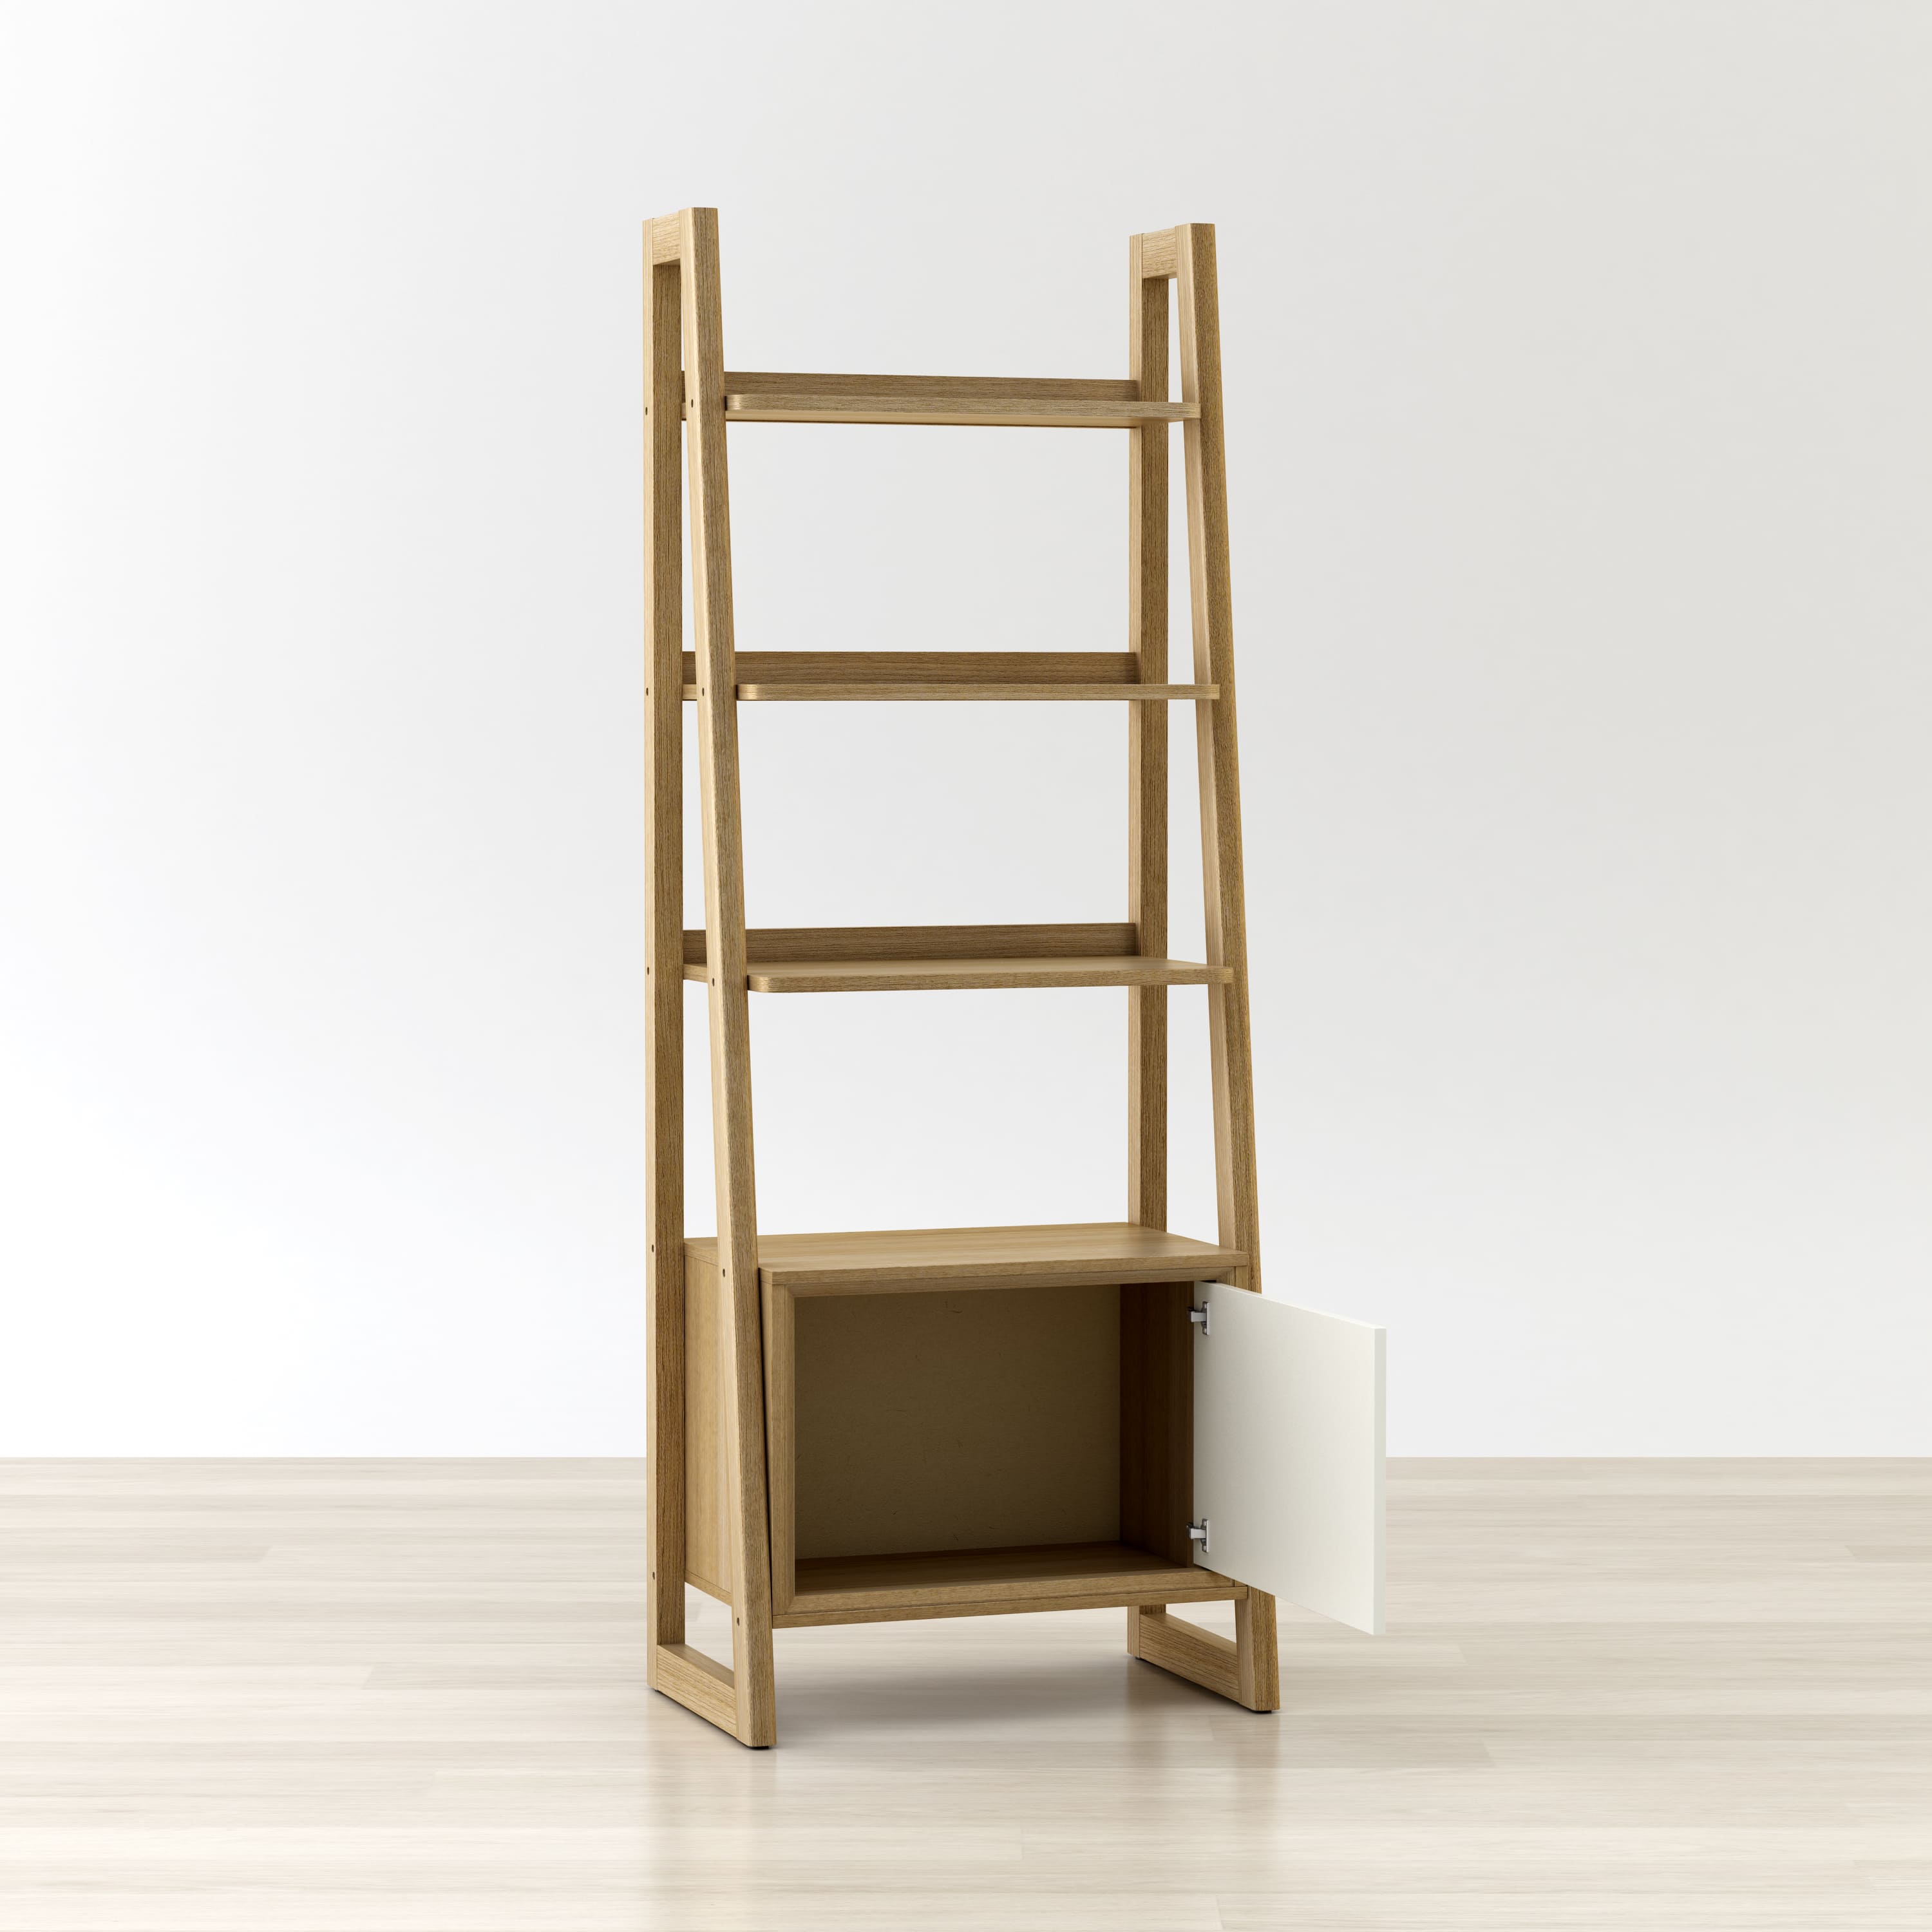 Anderson teak ladder bookshelf with drawer - open view